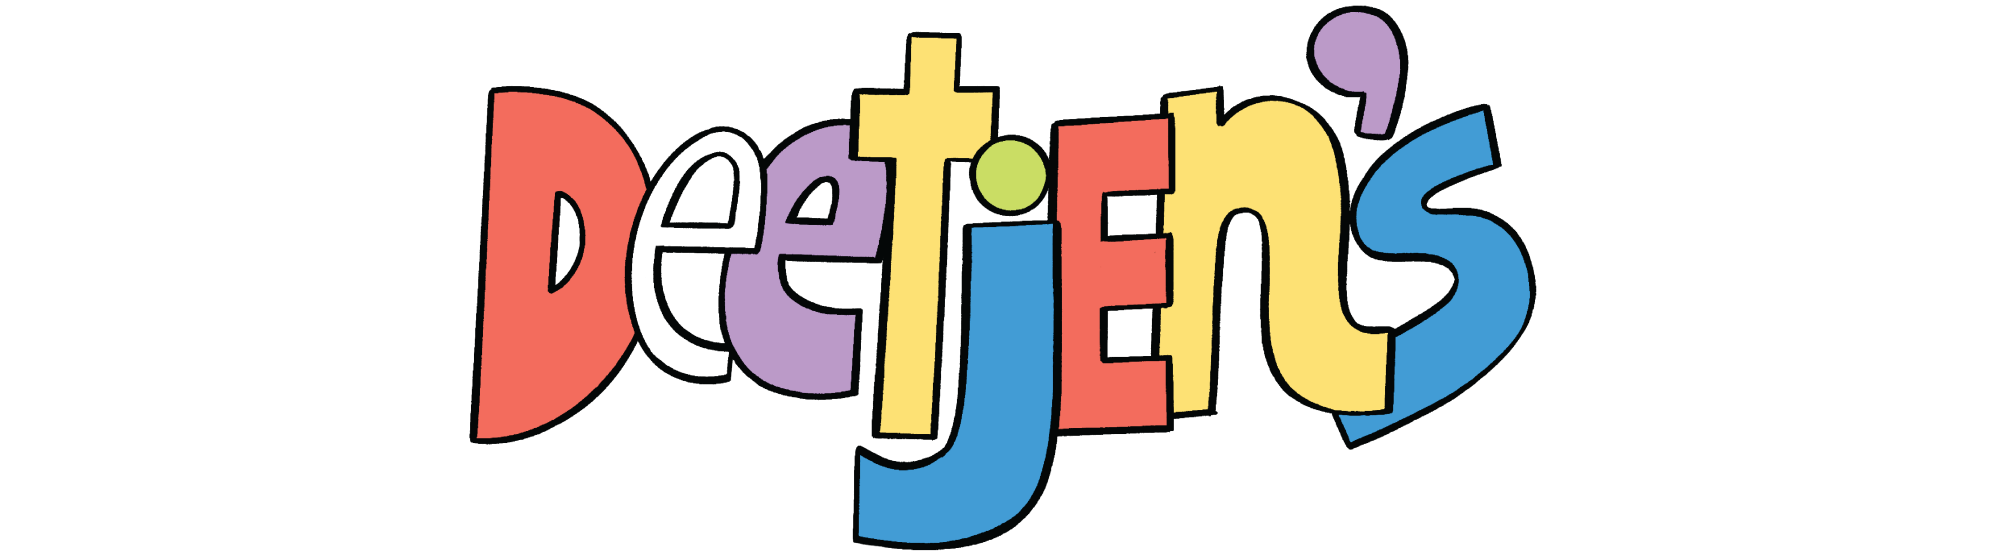 Colorful typography saying Deetjen's